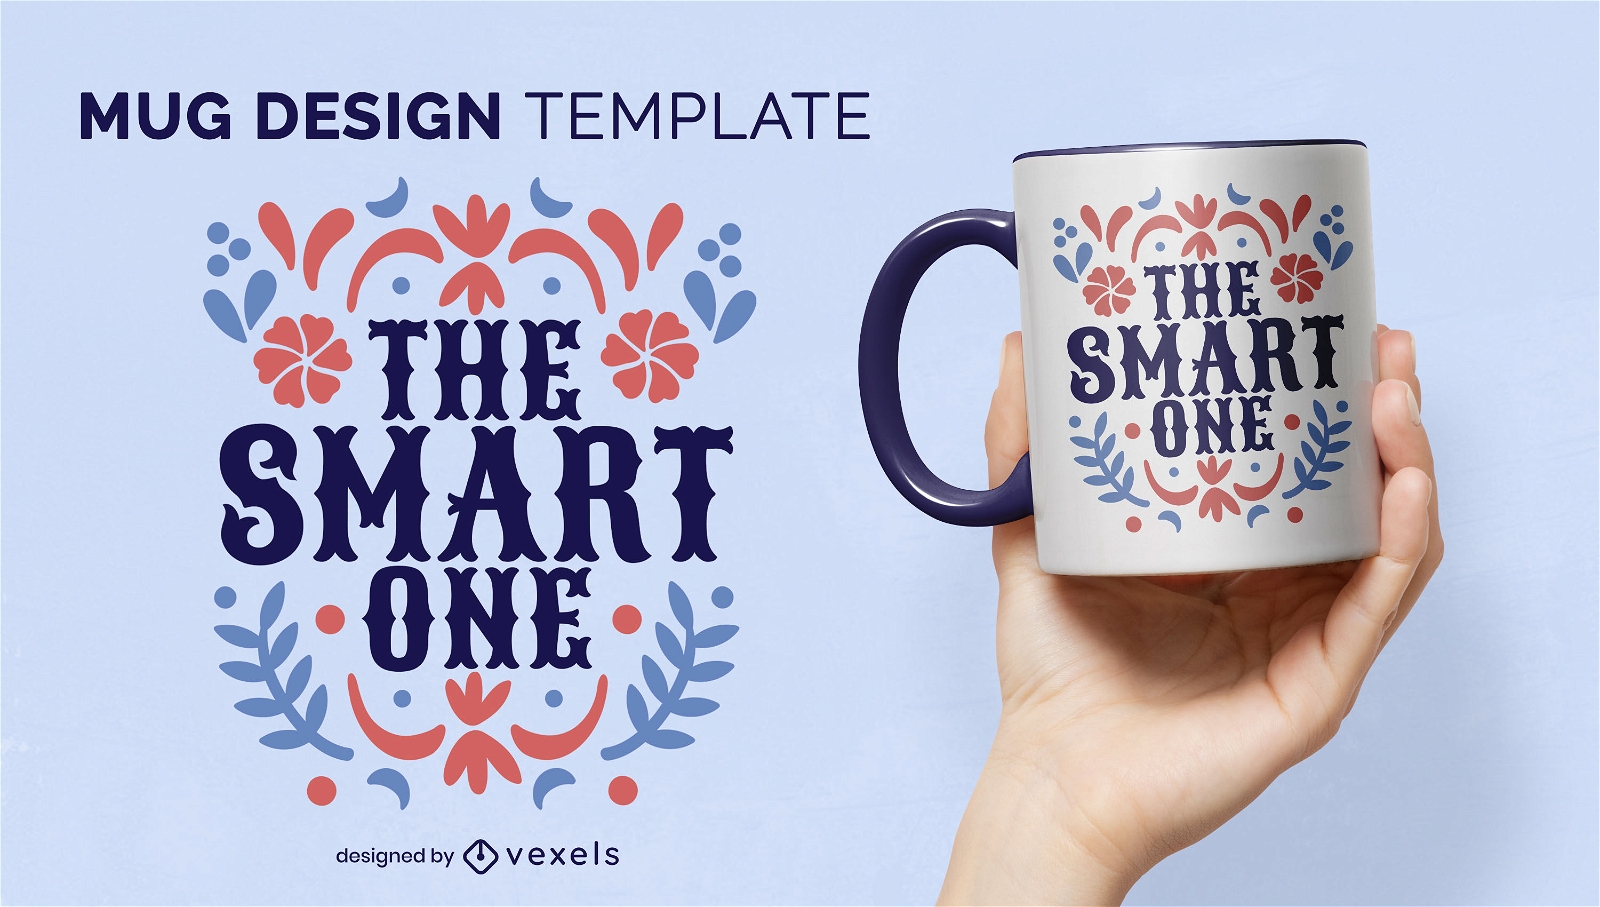 The smart one quote mug design